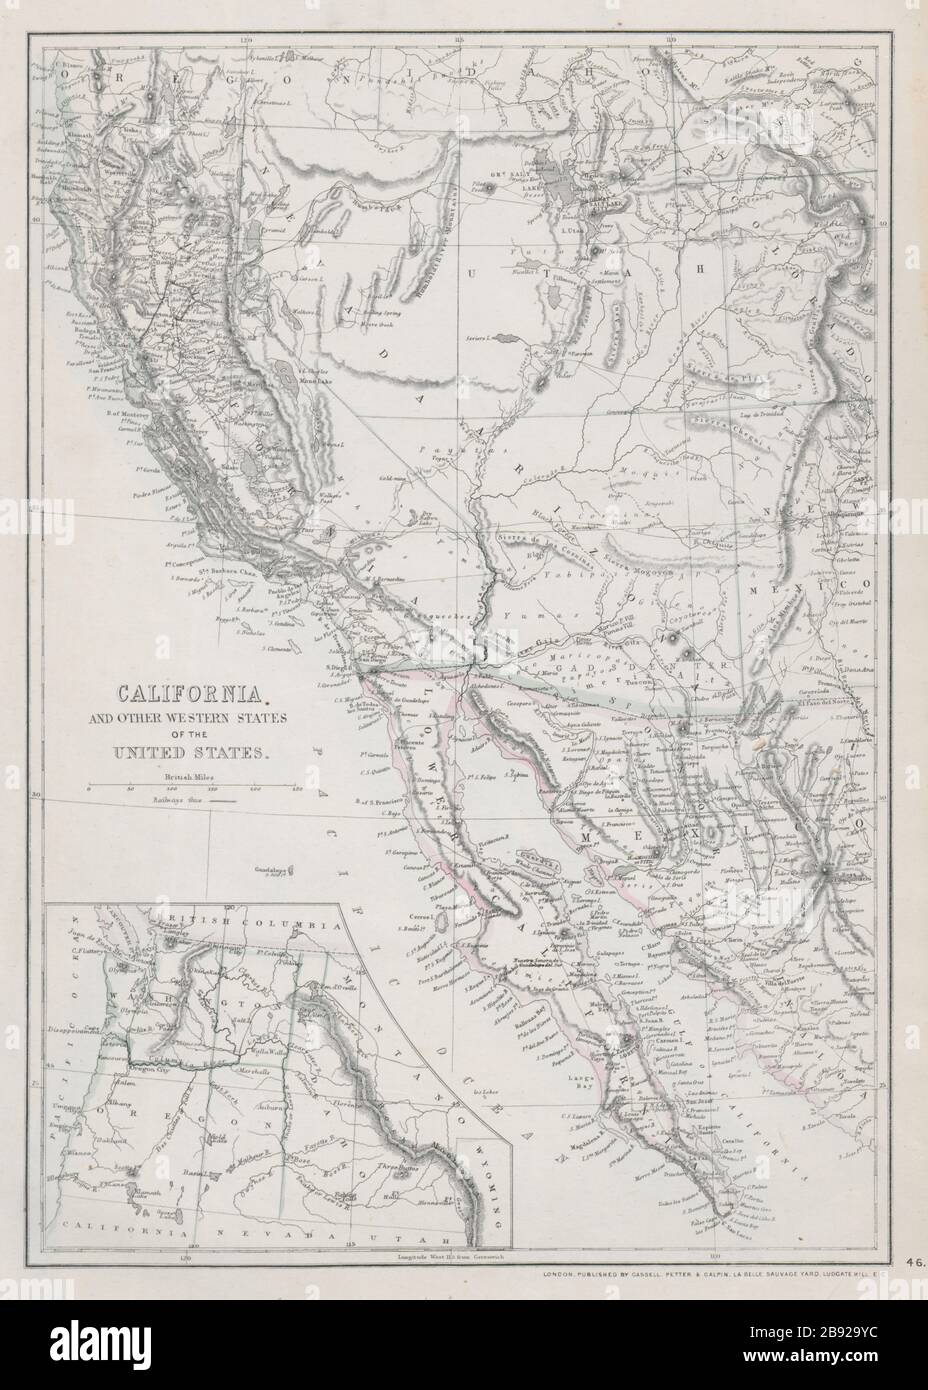 BAJA/CALIFORNIA Las Vegas in Arizona <1867 Nevada border change ETTLING  1868 map Stock Photo - Alamy